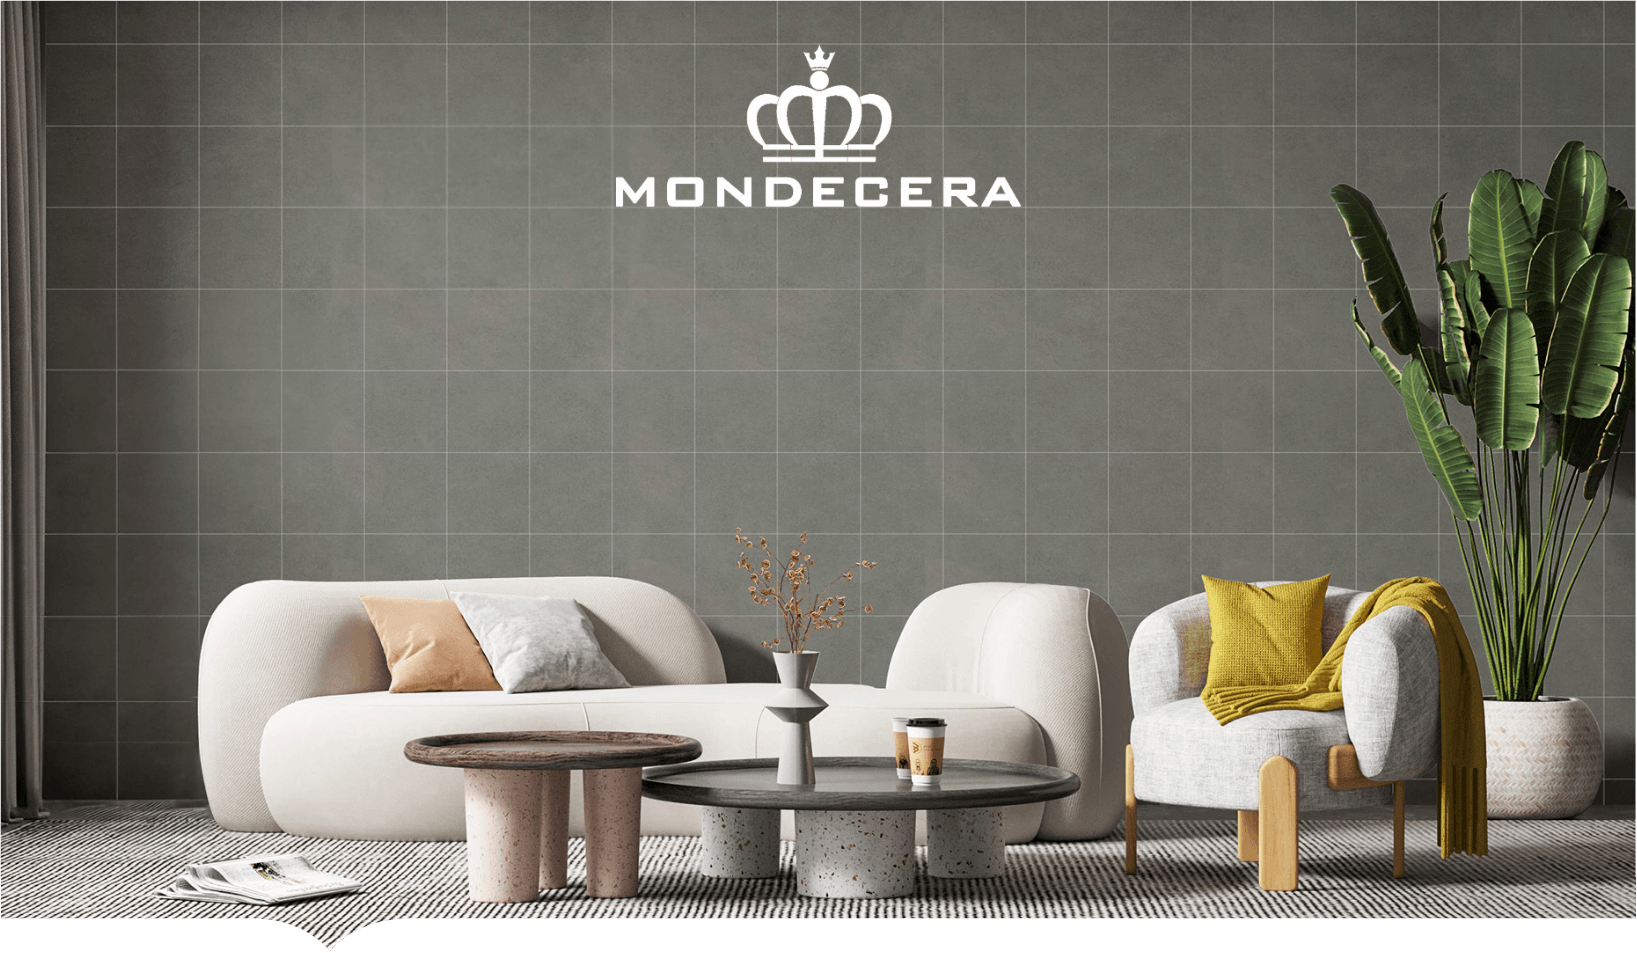 What We Do | Mondecera